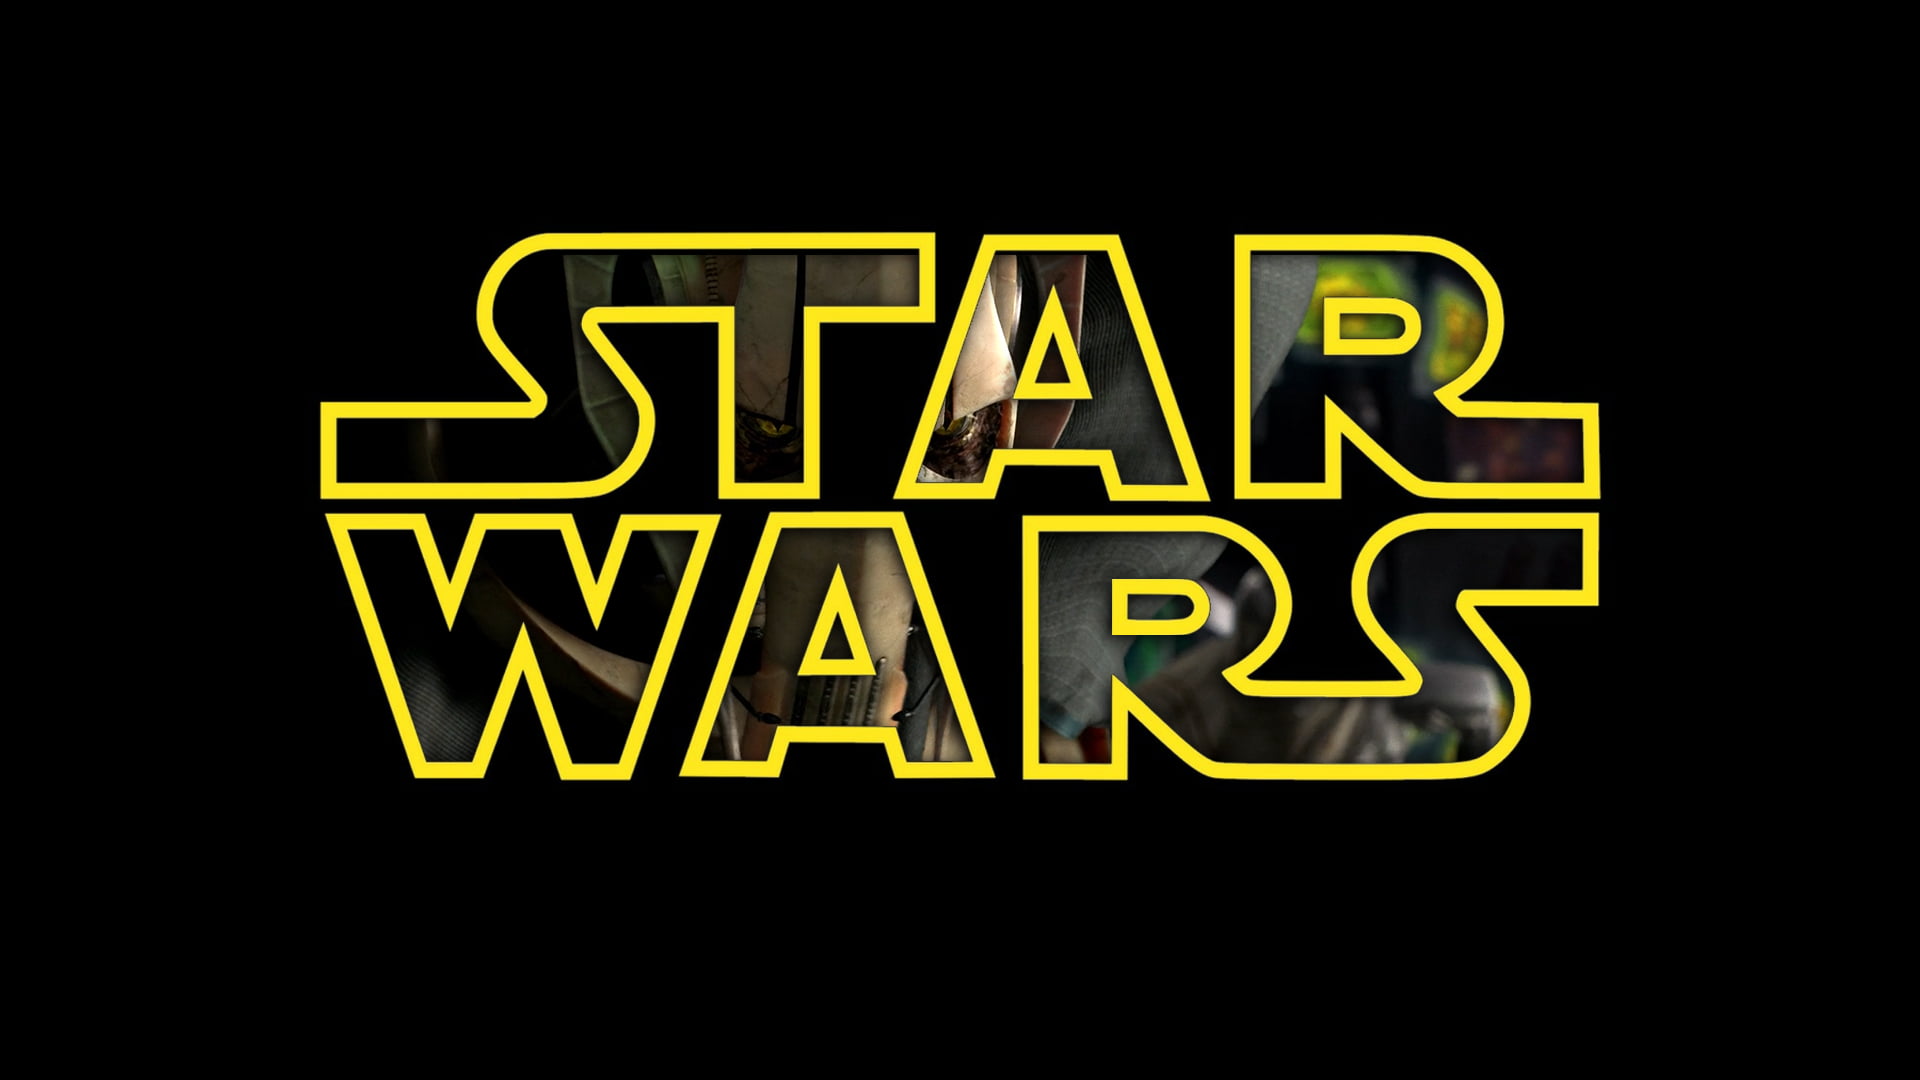 Star Wars logo, Star Wars, General Grievous